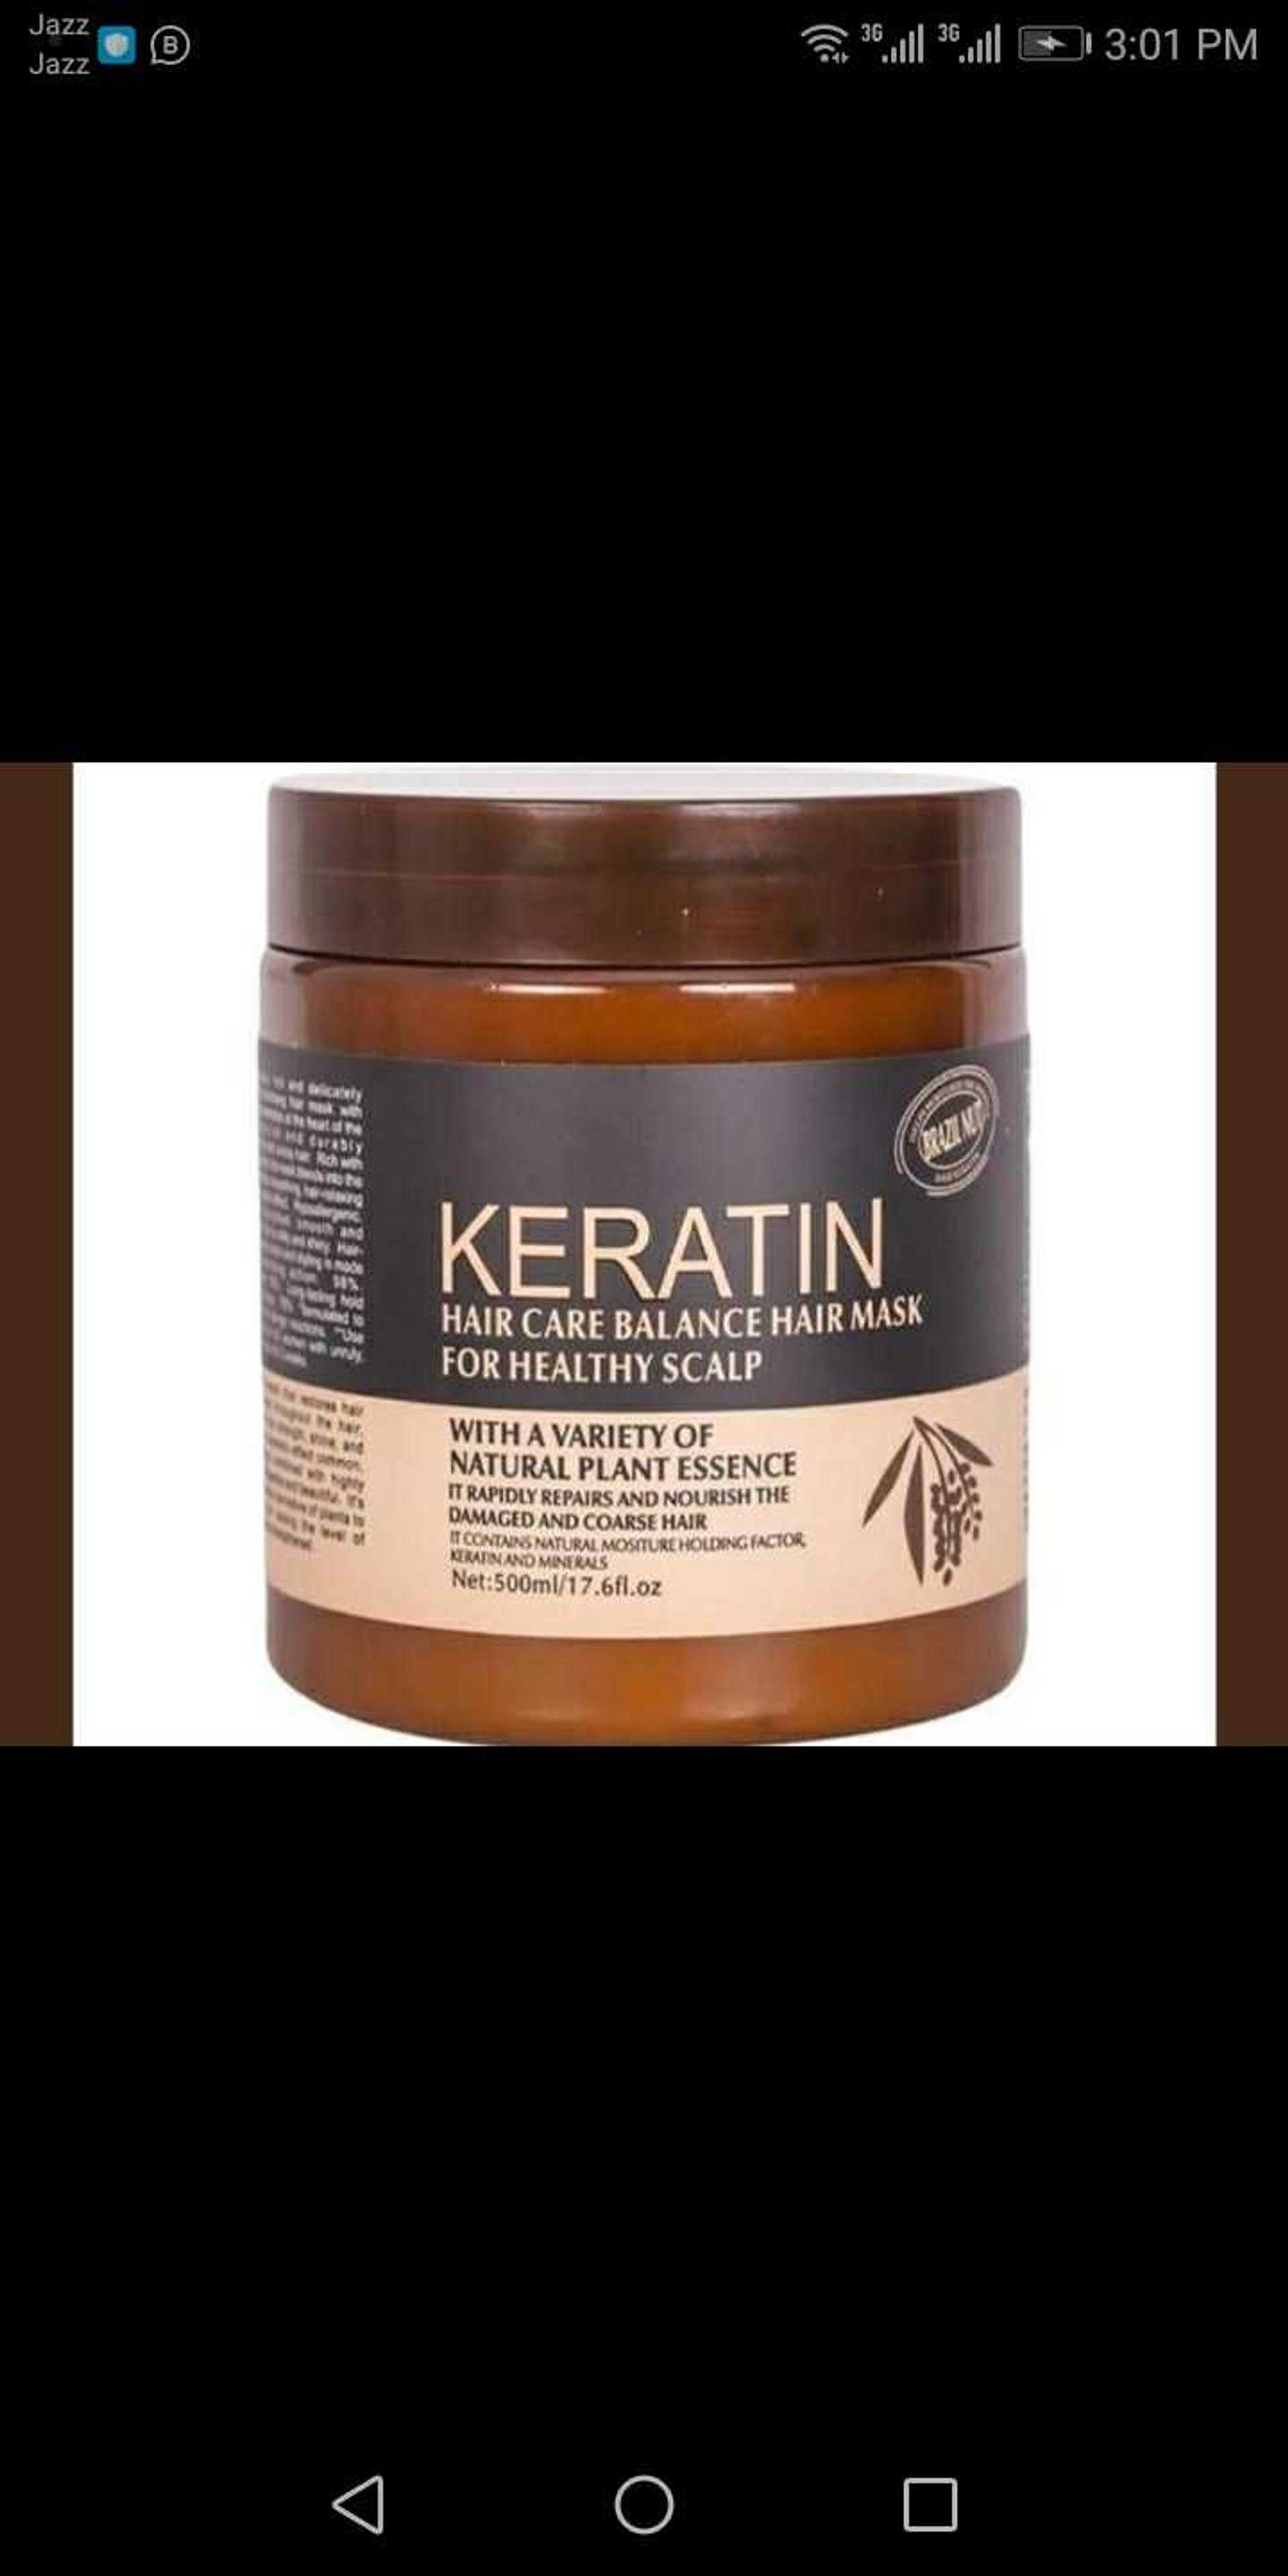 Keratin Hair Care Balance Hair Mask